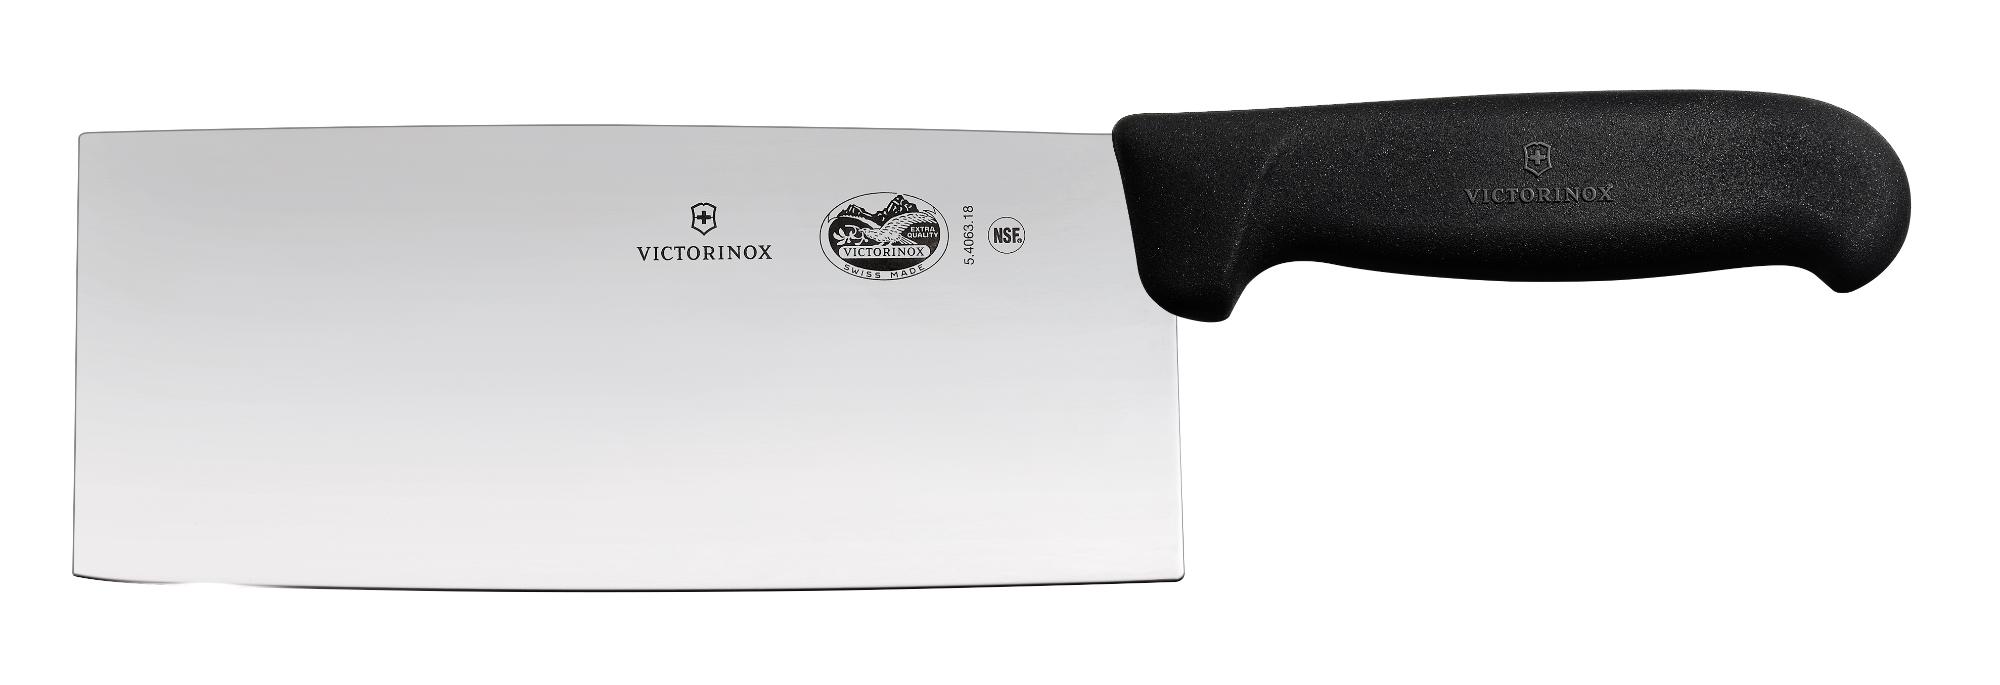 Fibrox filleting knife, very flexible, 18 cm - black